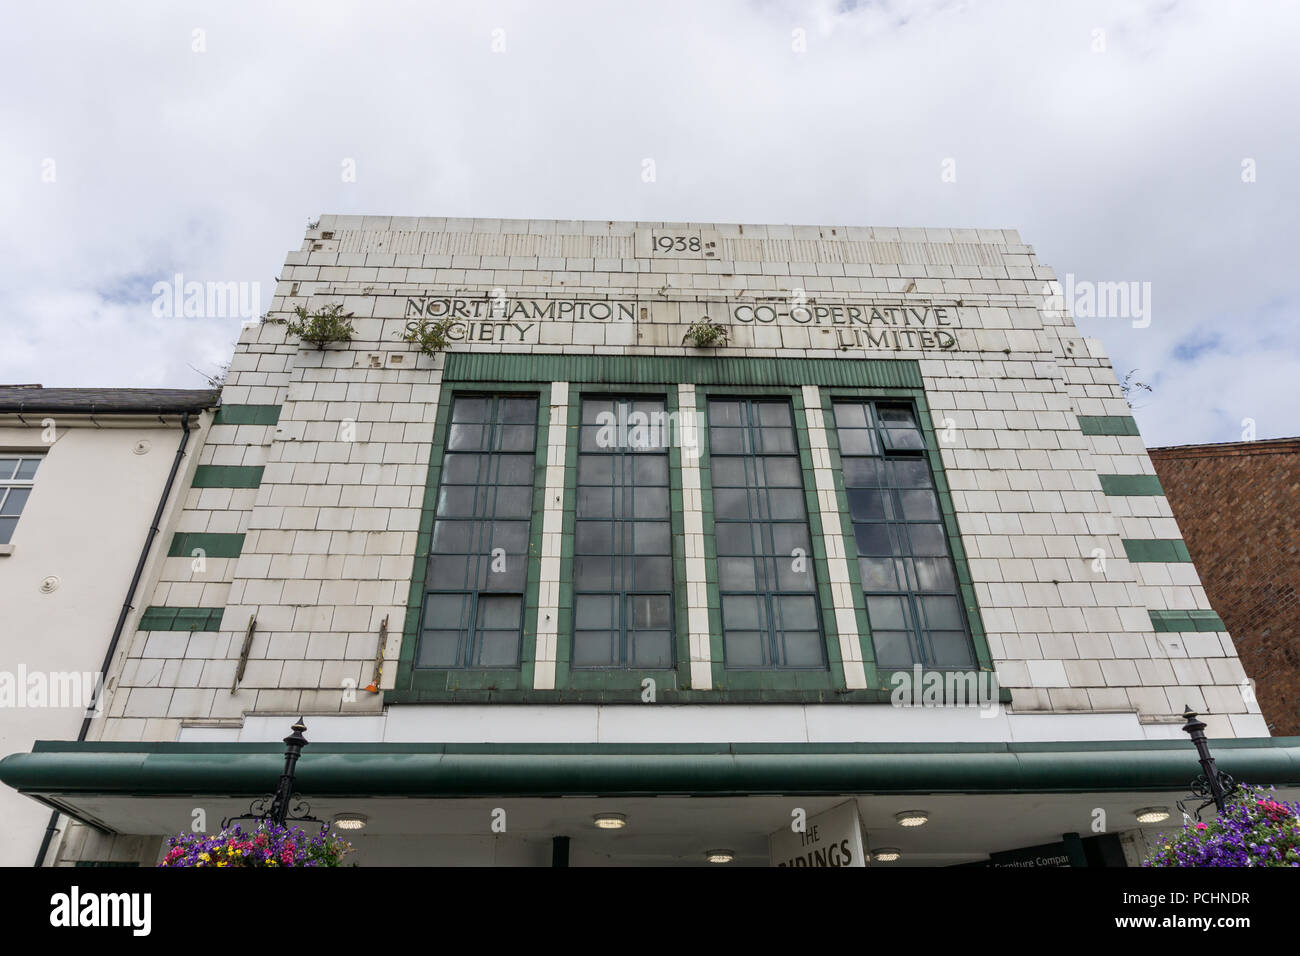 Art Deco style façade of the Cooperative Arcade, Northampton, UK Stock Photo